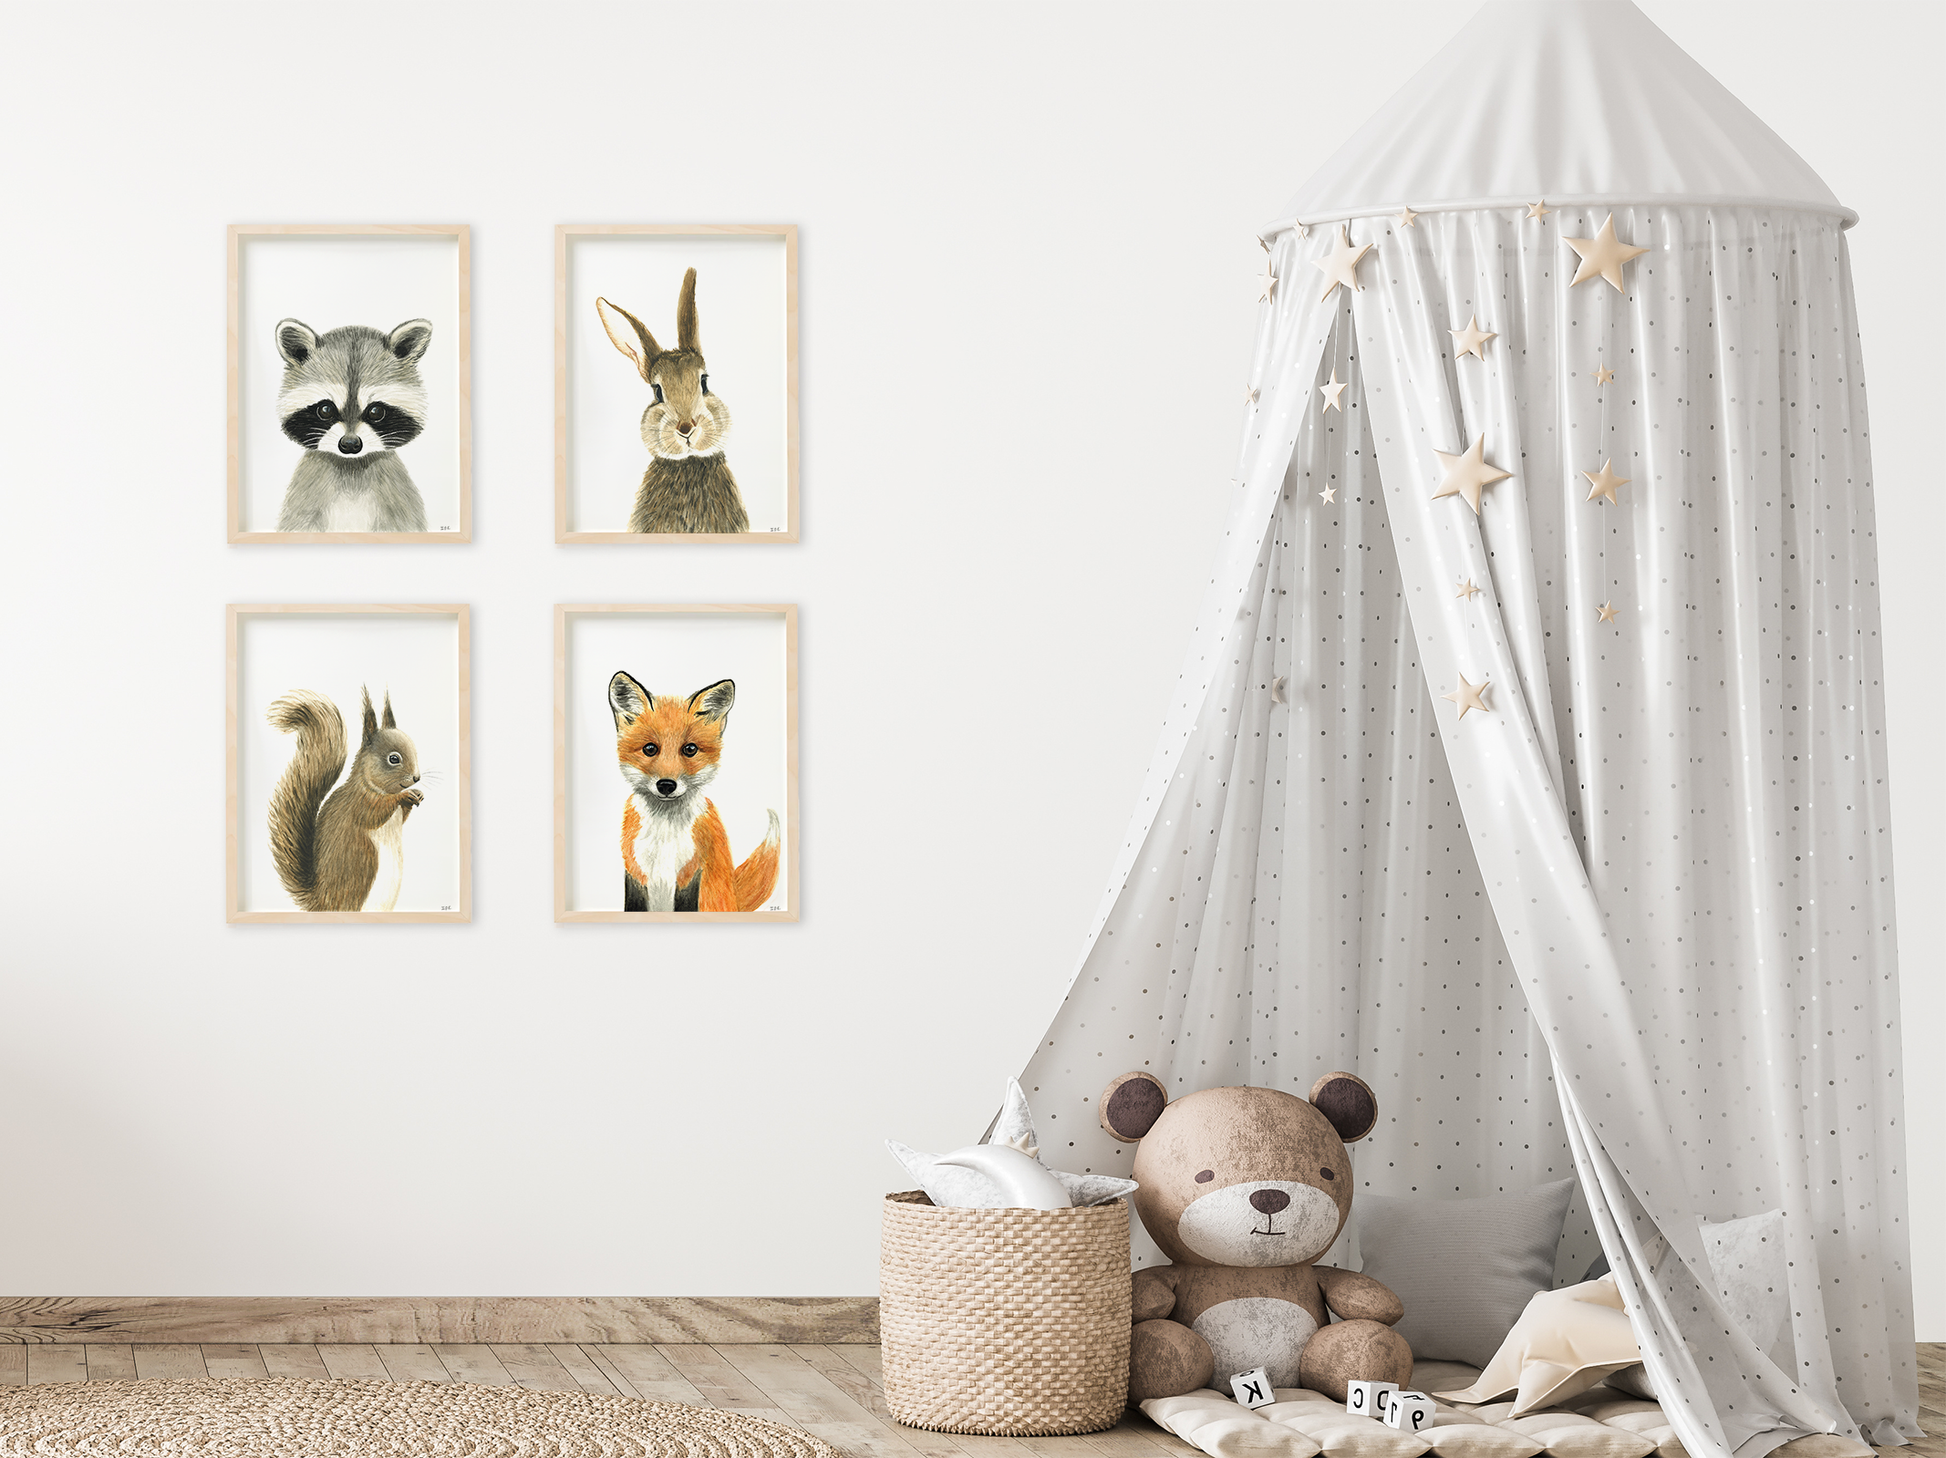 Set of 4 animal nursery prints in a kids' bedroom: racoon, rabbit, squirrel, fox